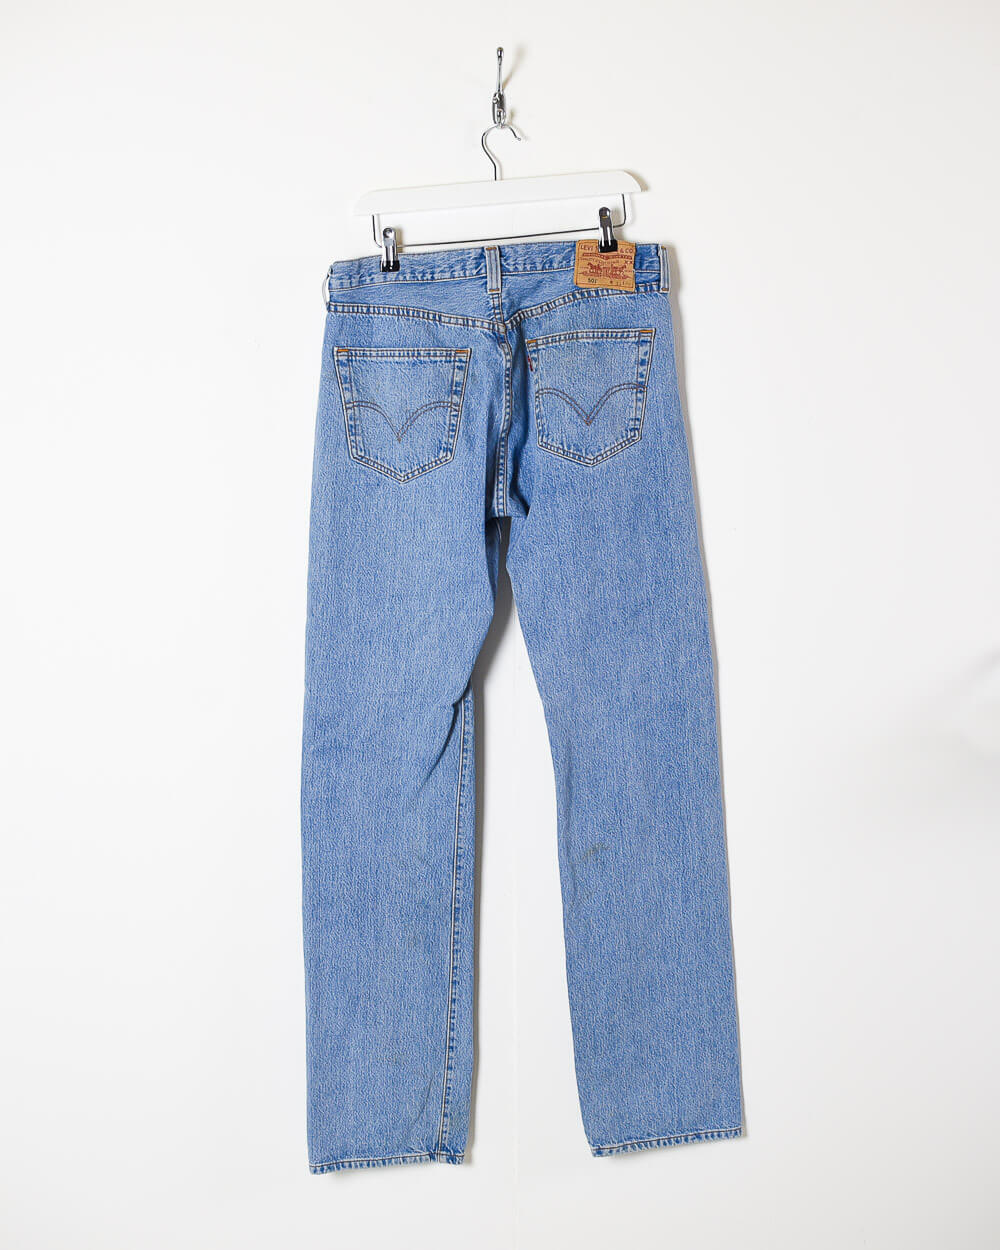 Blue Levi Strauss & Co. Jeans - W34 L36